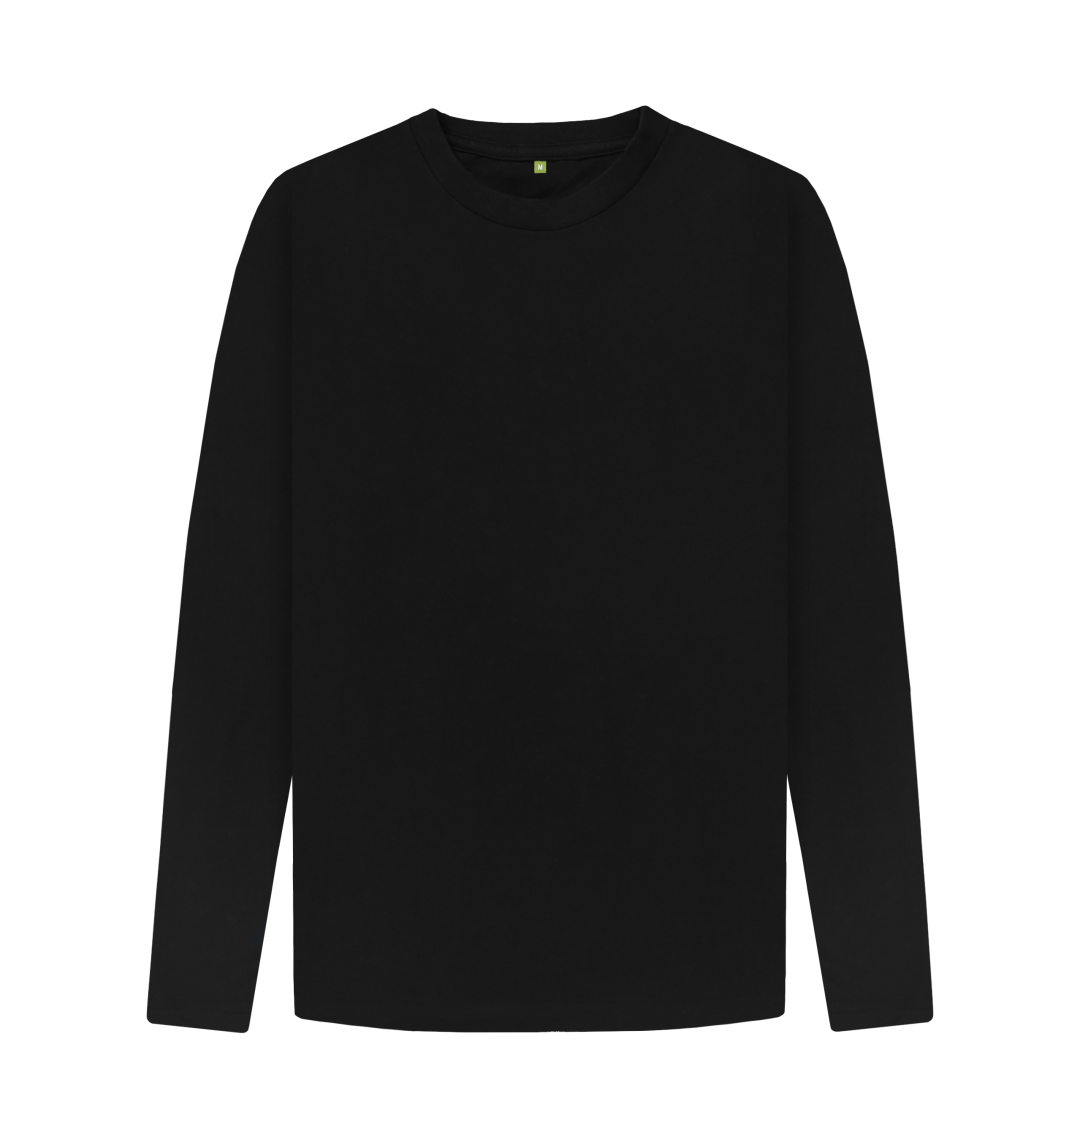 Full Sleeves Plain Black Tshirts - Buy Full Sleeves Plain Black